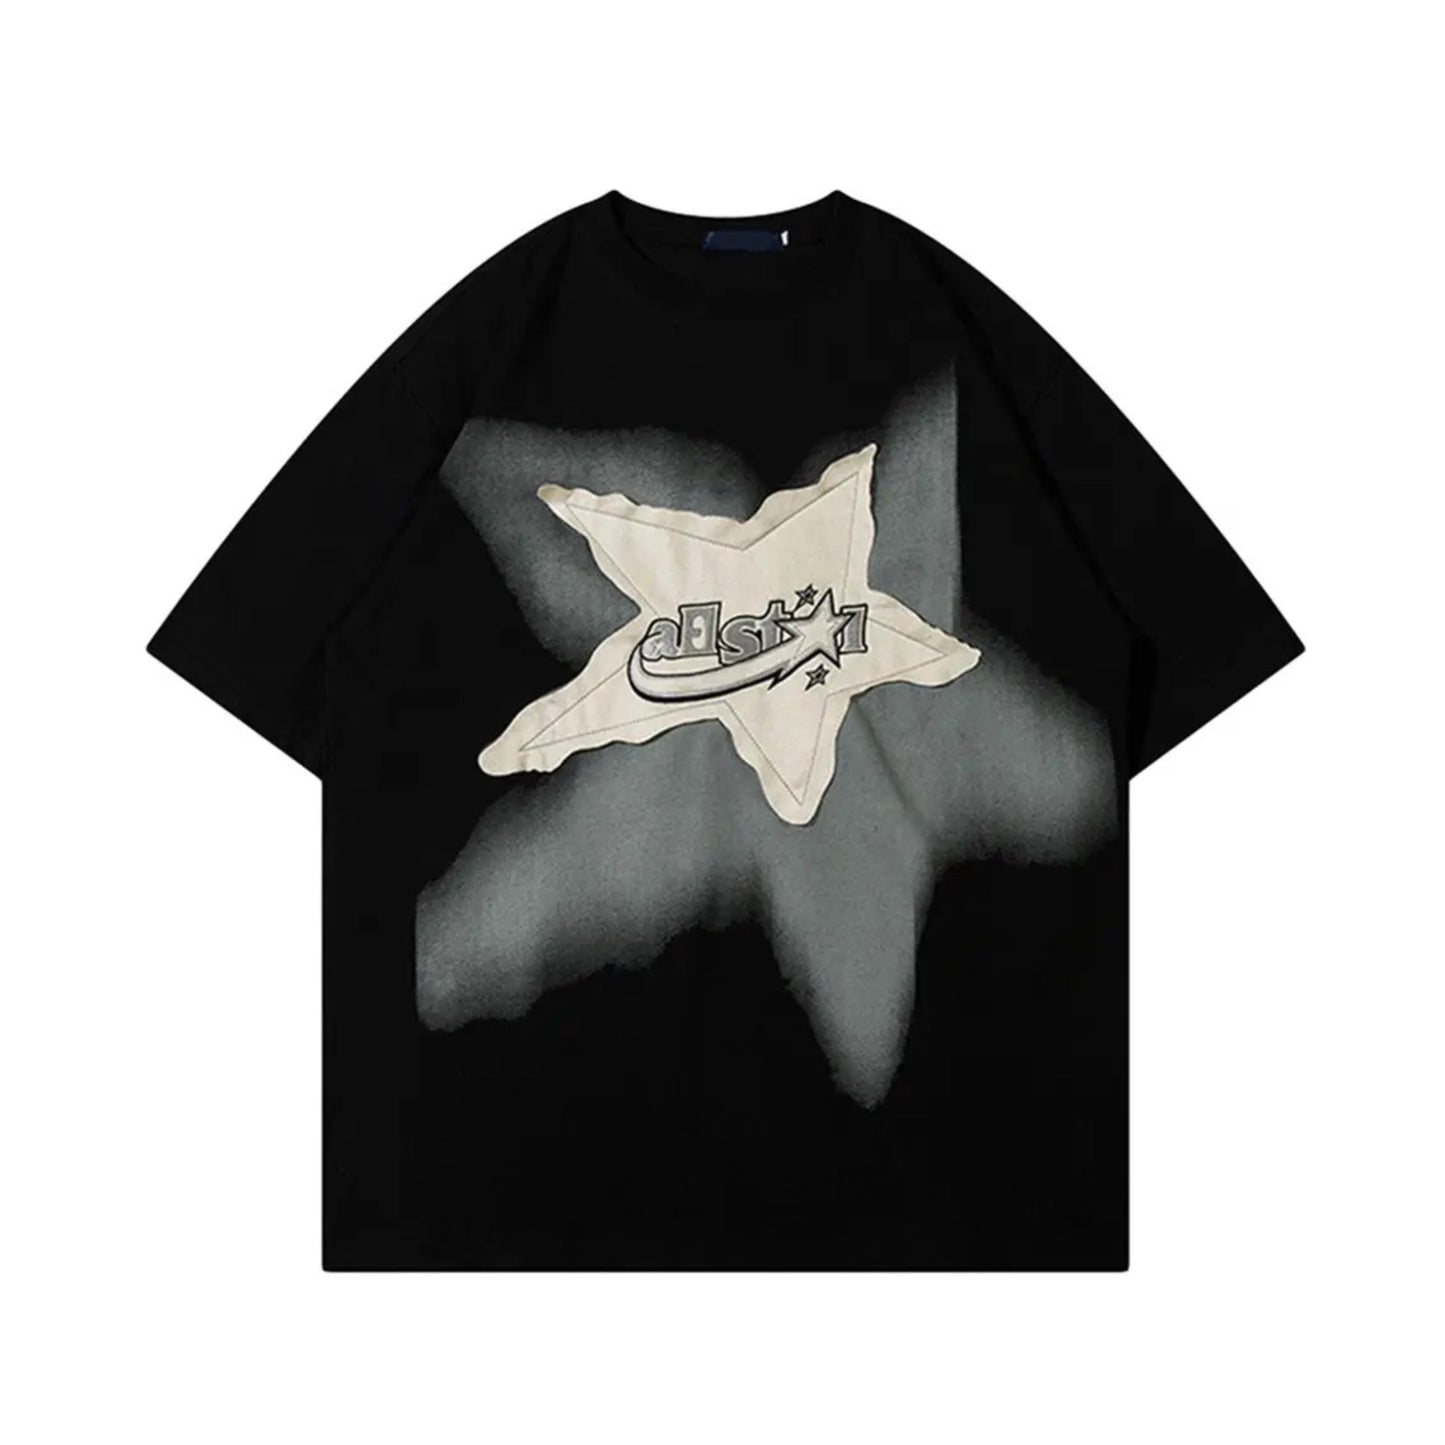 Stellar Stich T-shirt